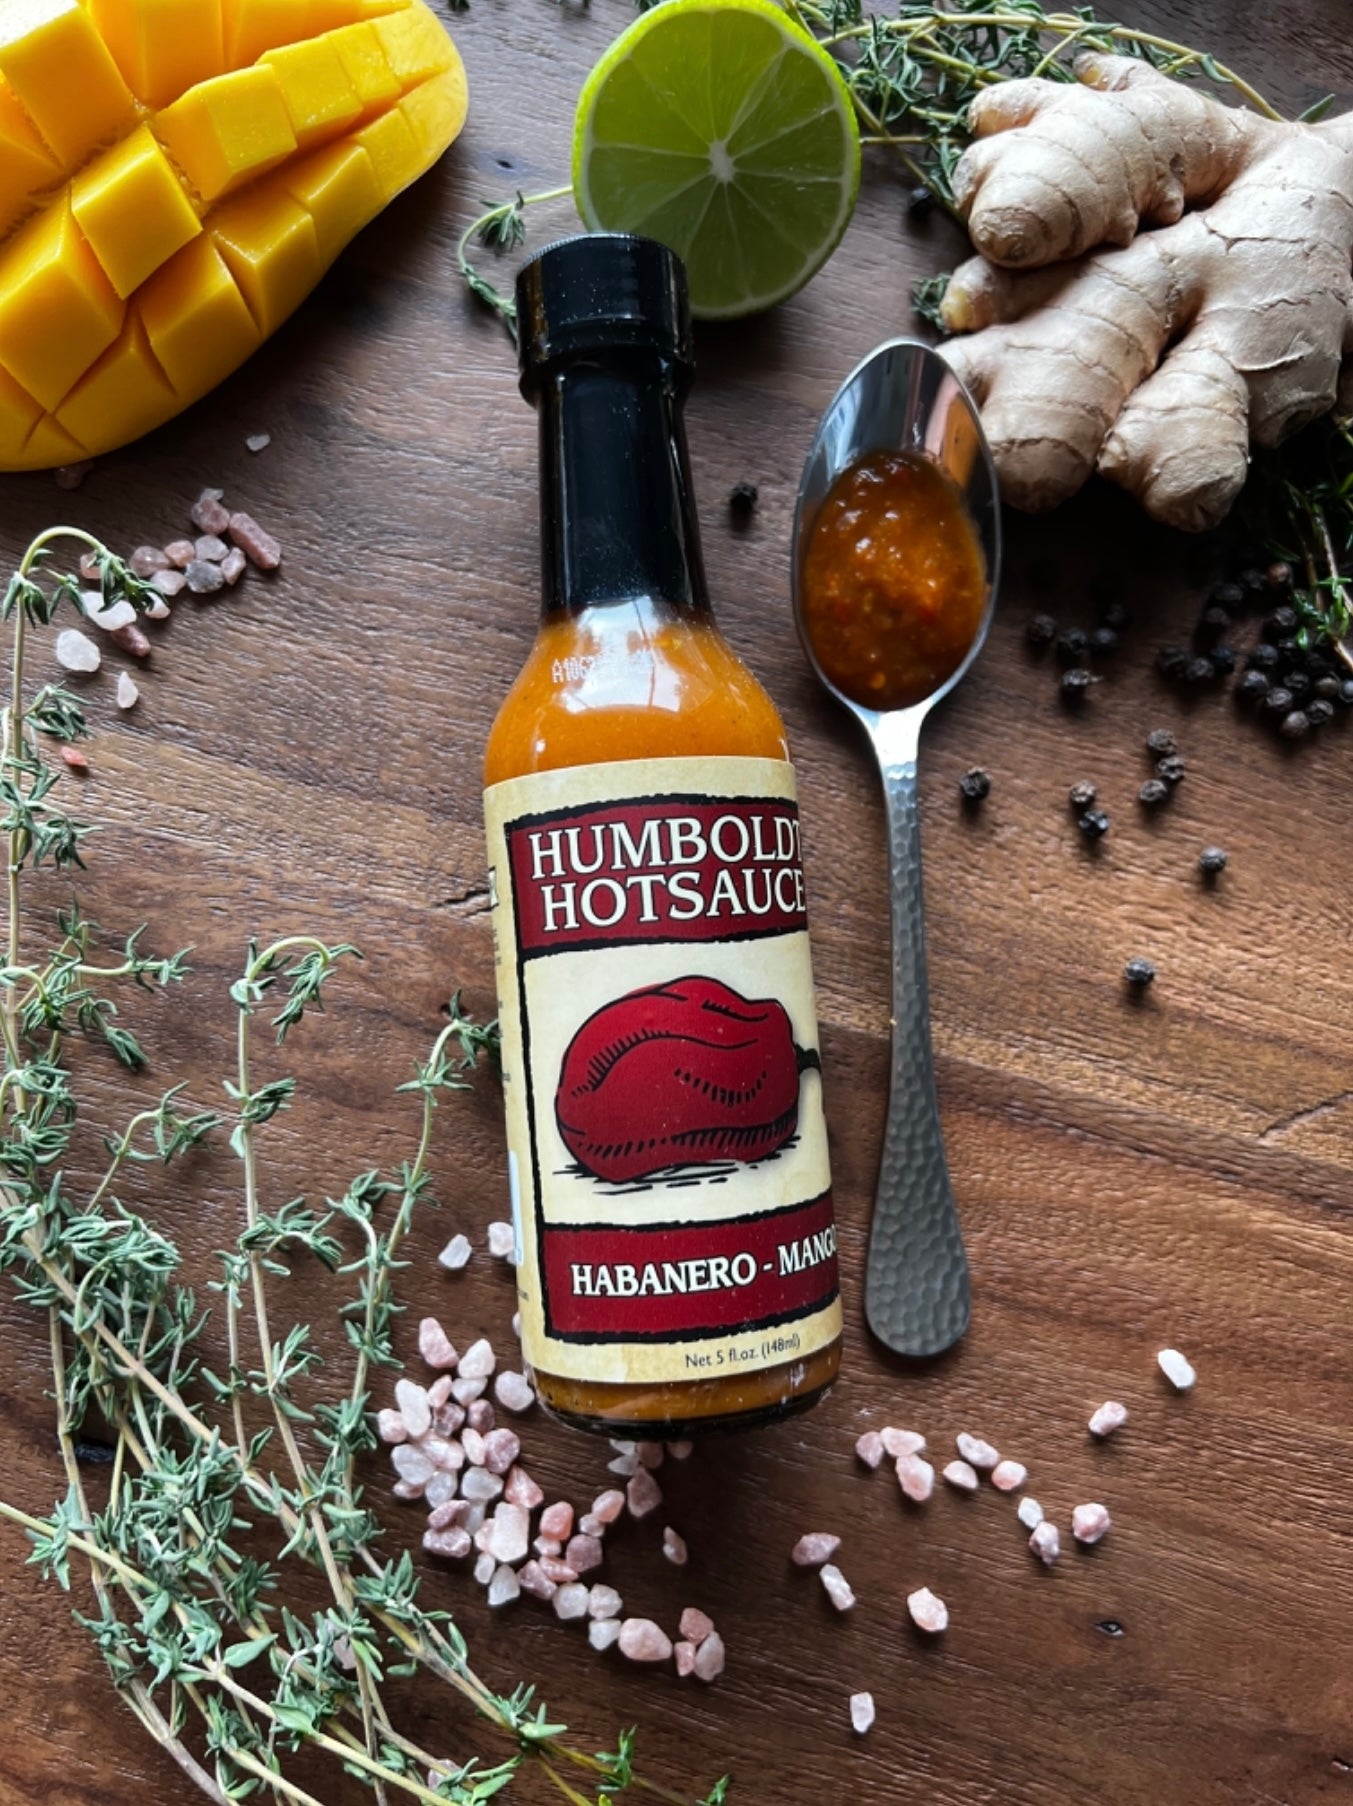 Humboldt HotSauce - Habanero Mango Sauce